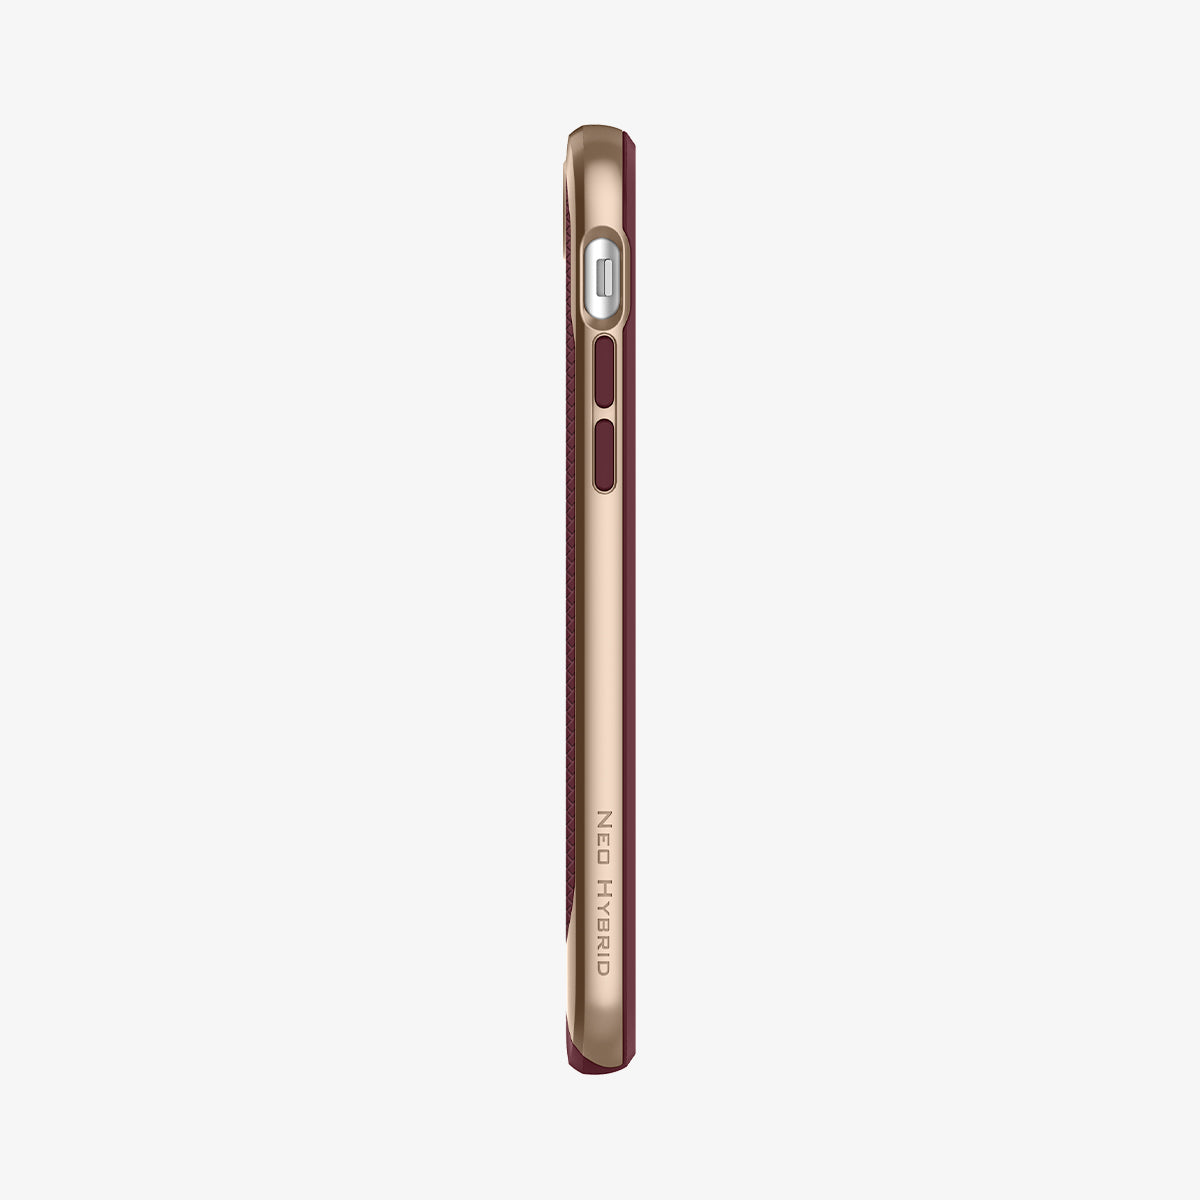 054CS22198 - iPhone SE Neo Hybrid Herringbone case in burgundy showing the side